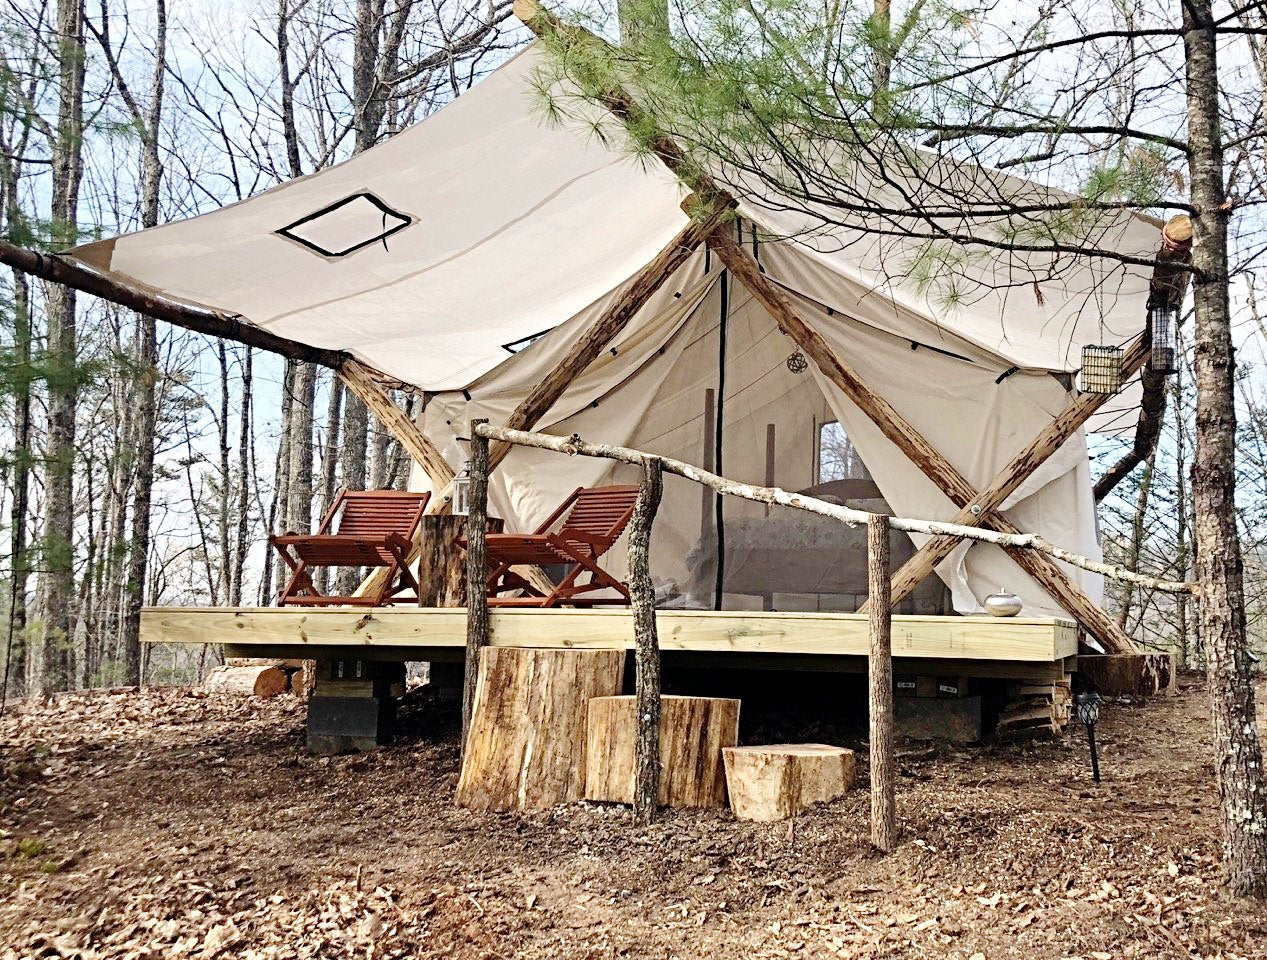 Glamping Tent on Wood Platform